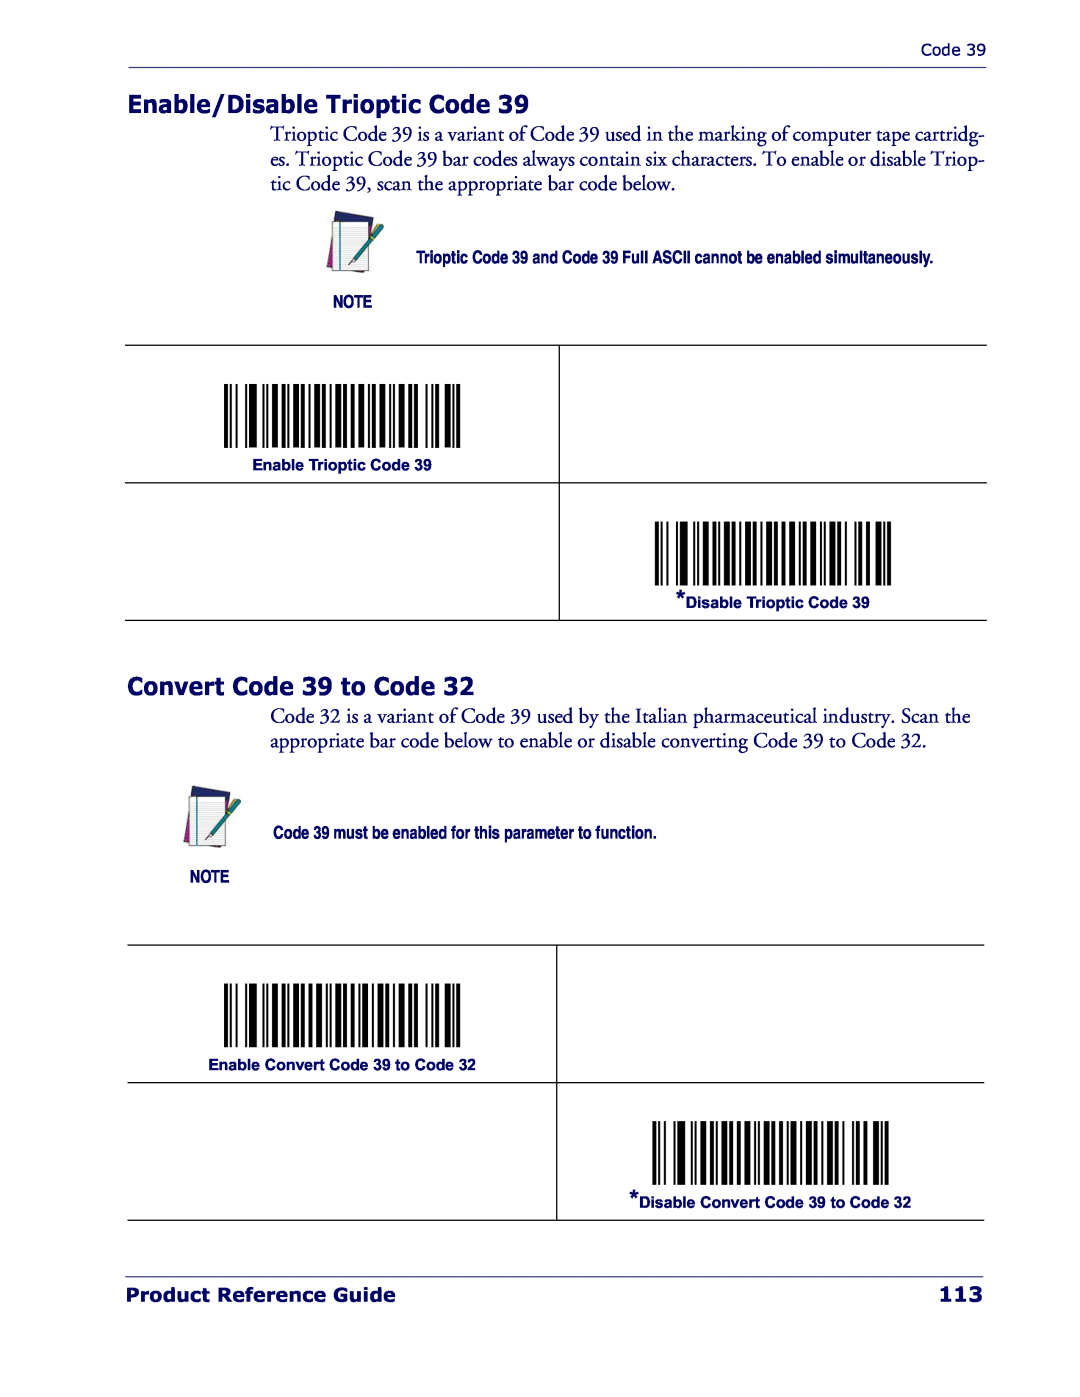 Datalogic Scanning QD 2300 manual Enable/Disable Trioptic Code, Convert Code 39 to Code 